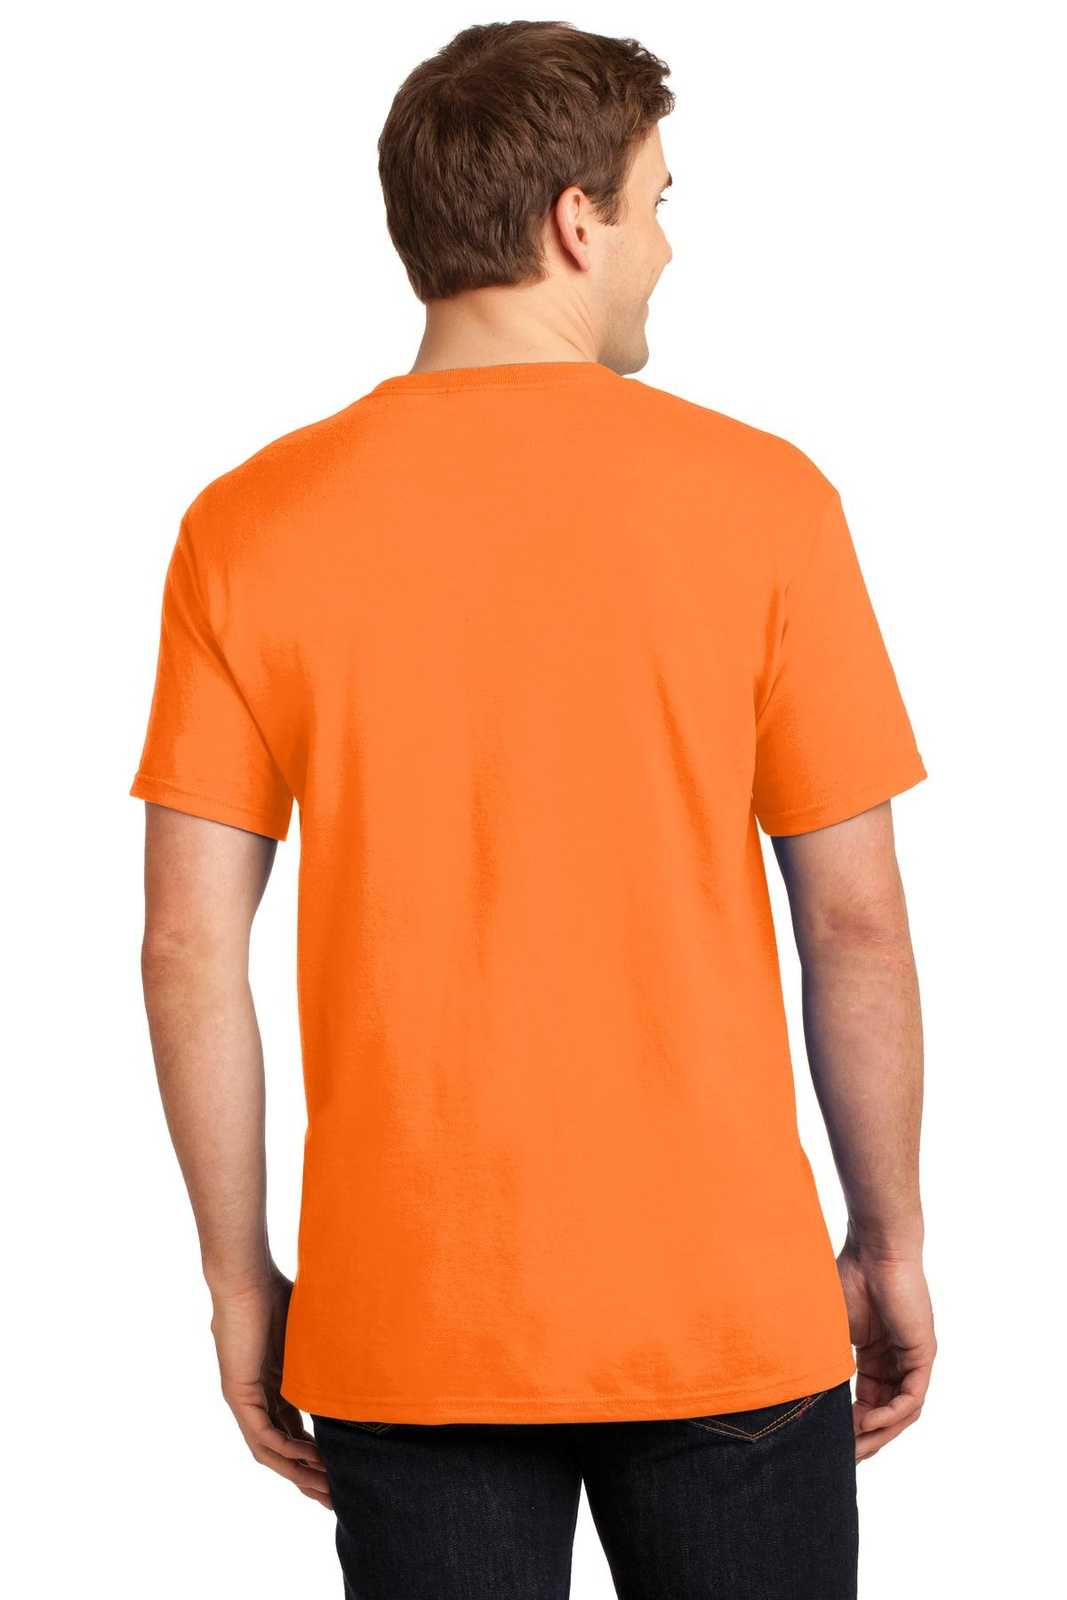 Jerzees 29MP Dri-Power 50/50 Cotton/Poly Pocket T-Shirt - Safety Orange - HIT a Double